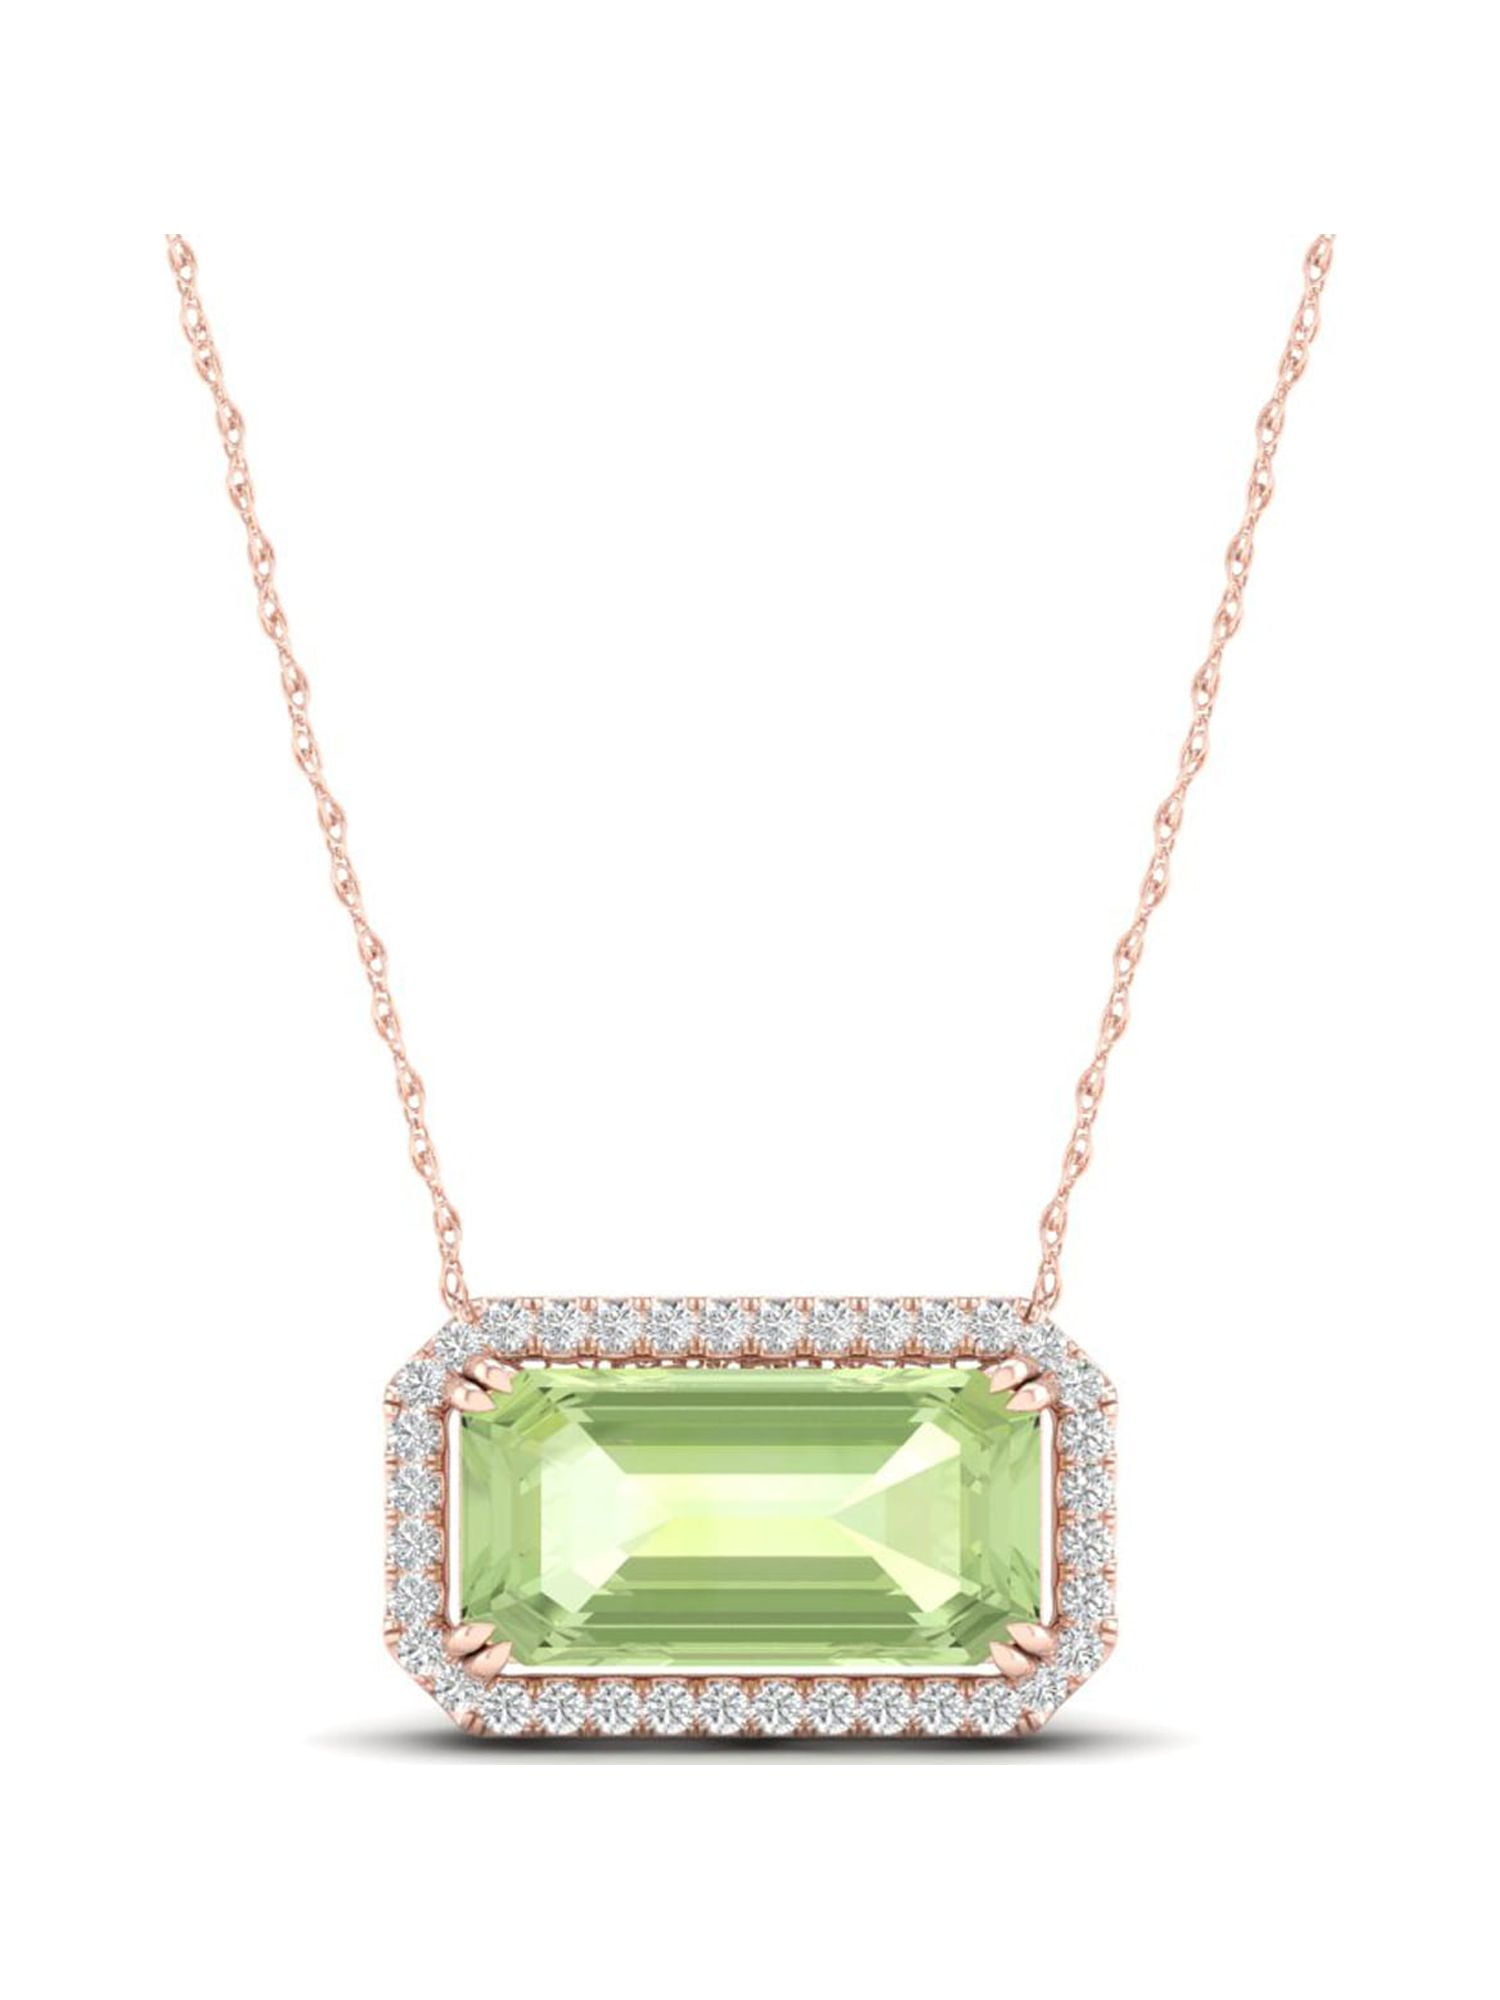 Tiffany & Co. 1.00 Carat Emerald Cut Diamond Pendant | Farringdons Jewellery